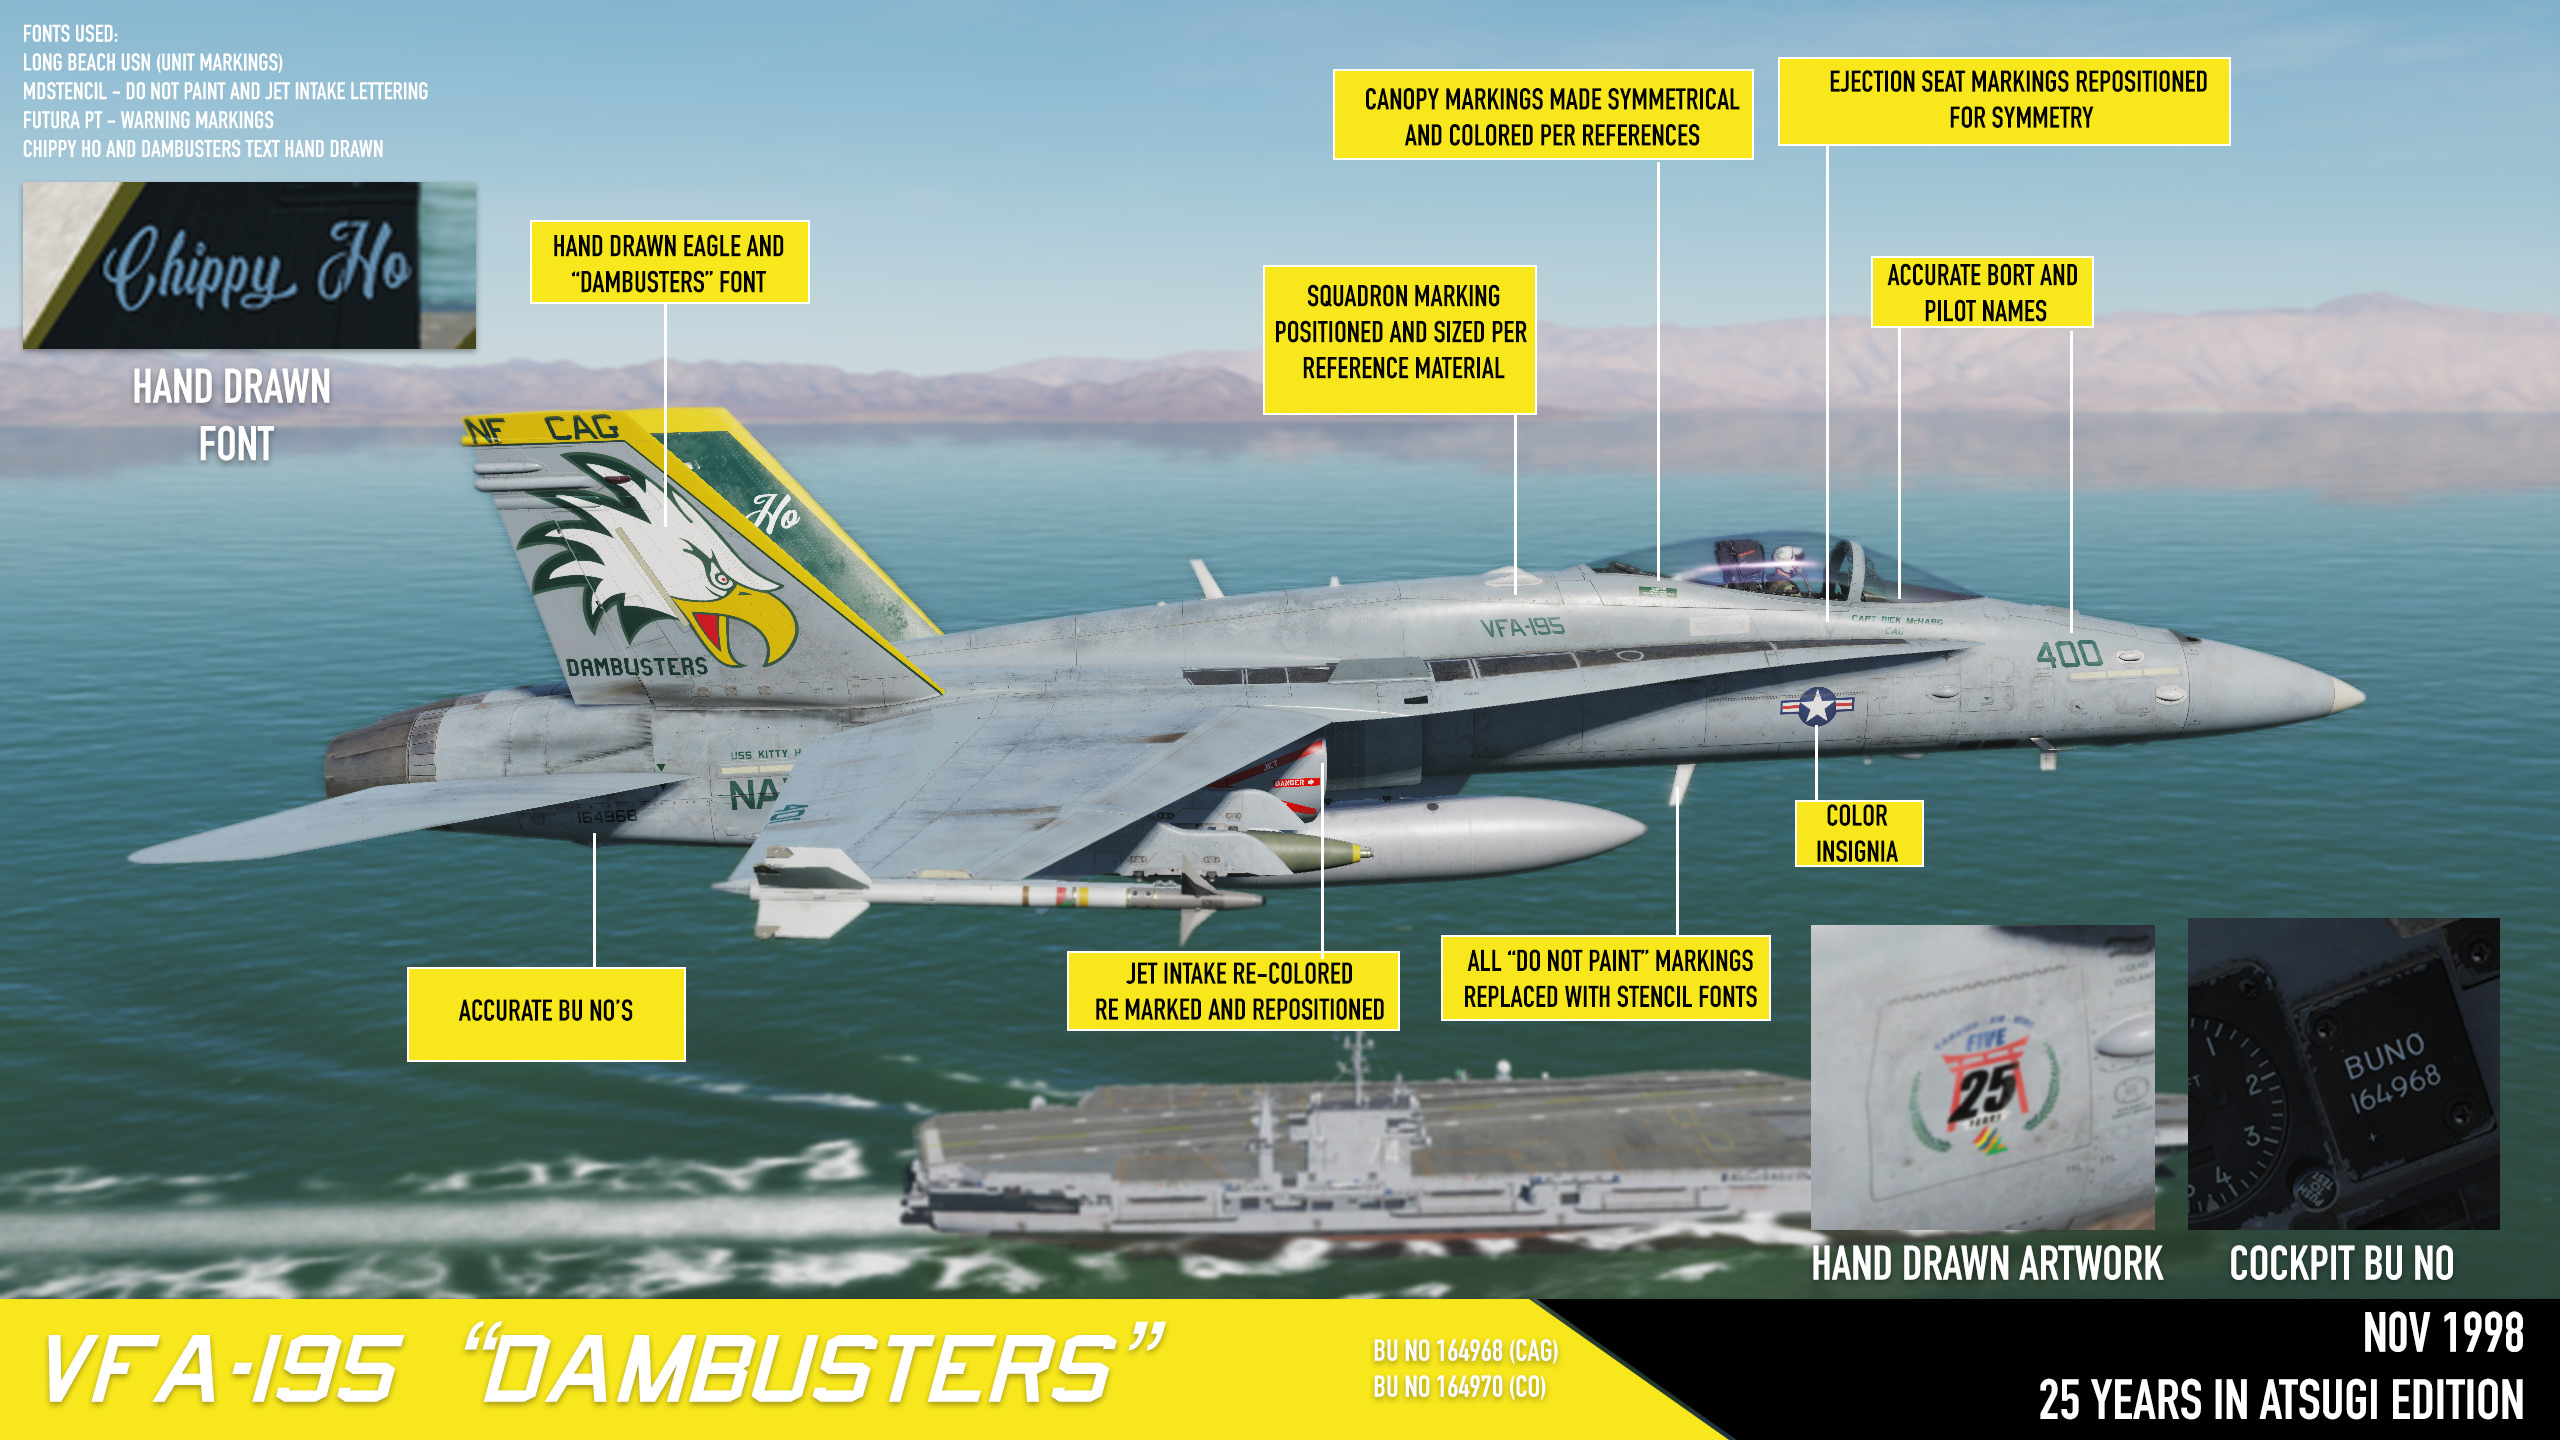 VFA-195 "Dambusters" (Nov 1998) BU164968 (CAG) and BU164970 (CO) 